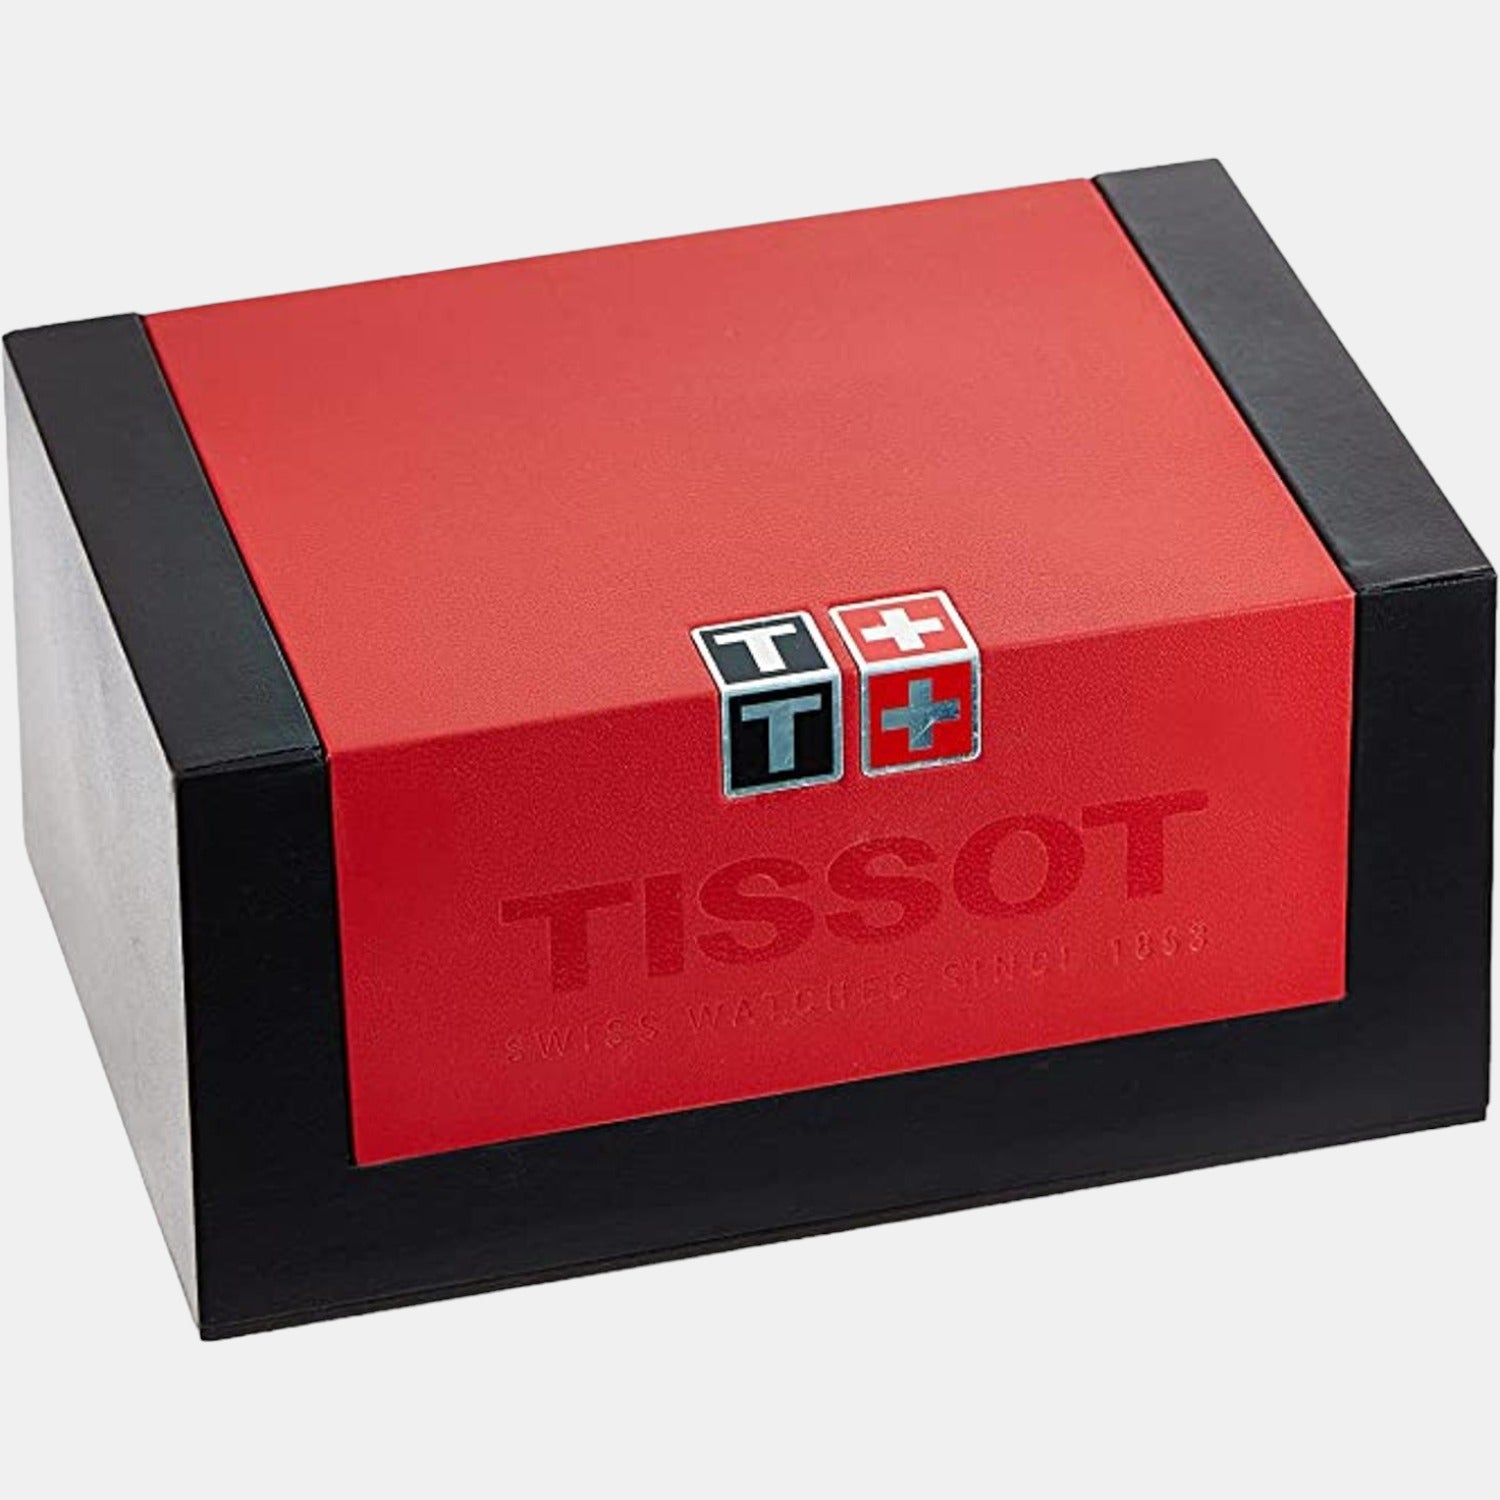 tissot-stainless-steel-black-analog-men-watch-t1014173305100